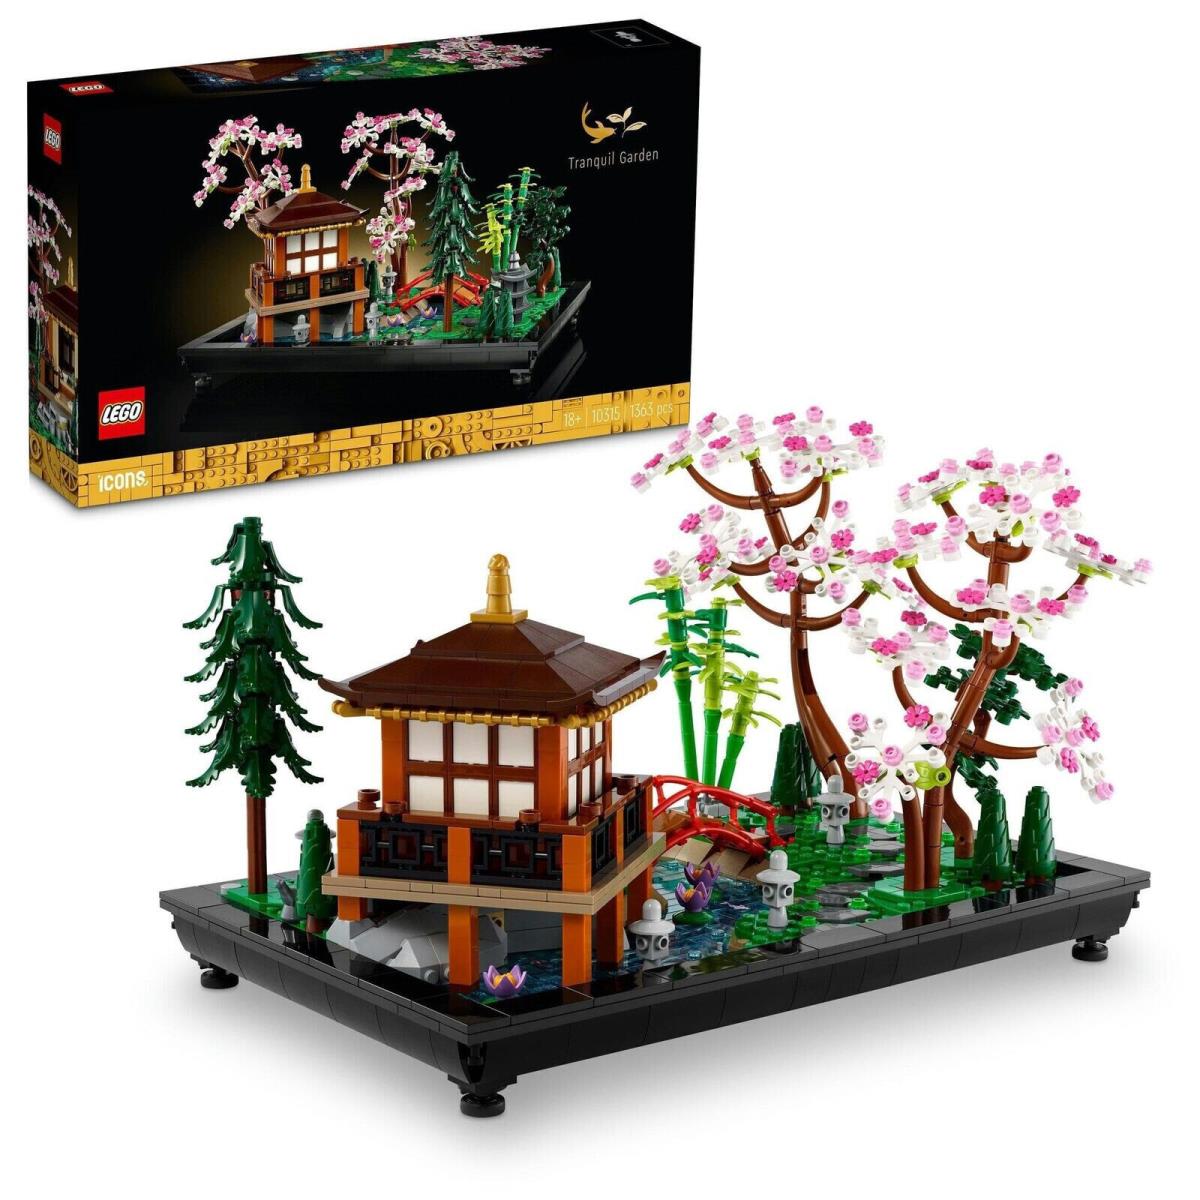 Lego 10315 Icons Tranquil Garden Japanese Zen Gardens Meditation 1 363 Pcs